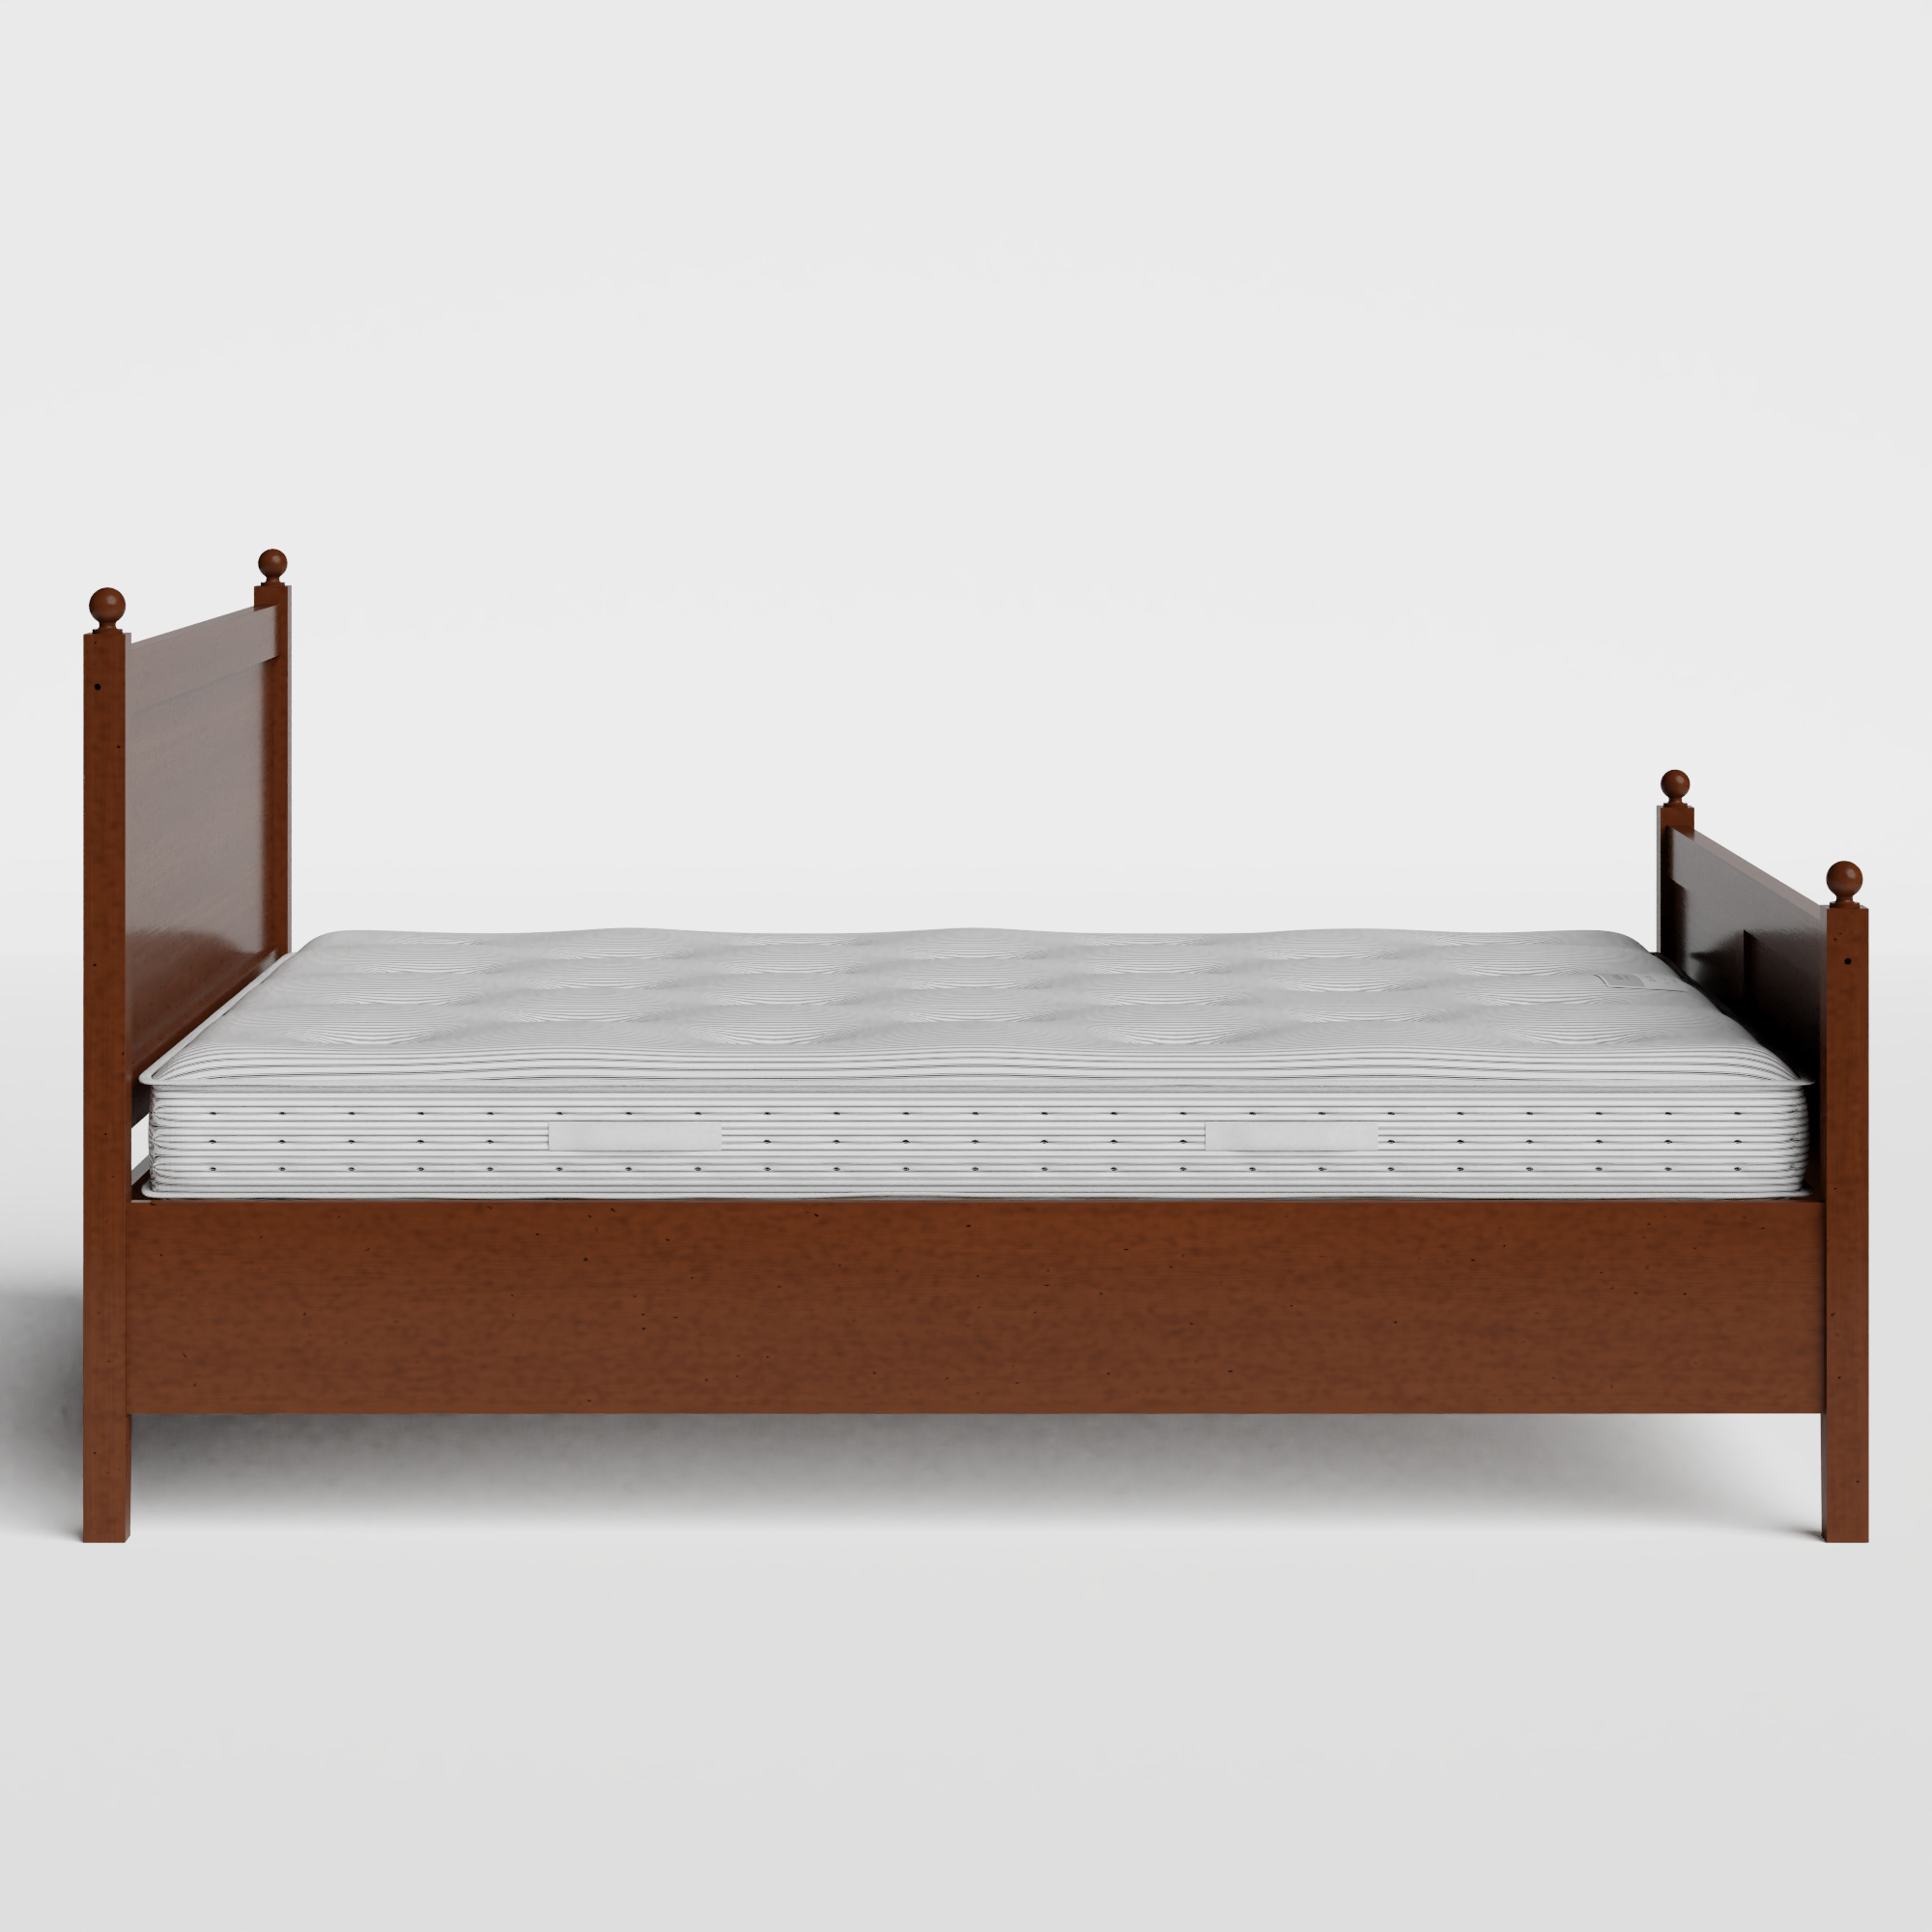 Marbella wood bed in dark cherry with Juno mattress